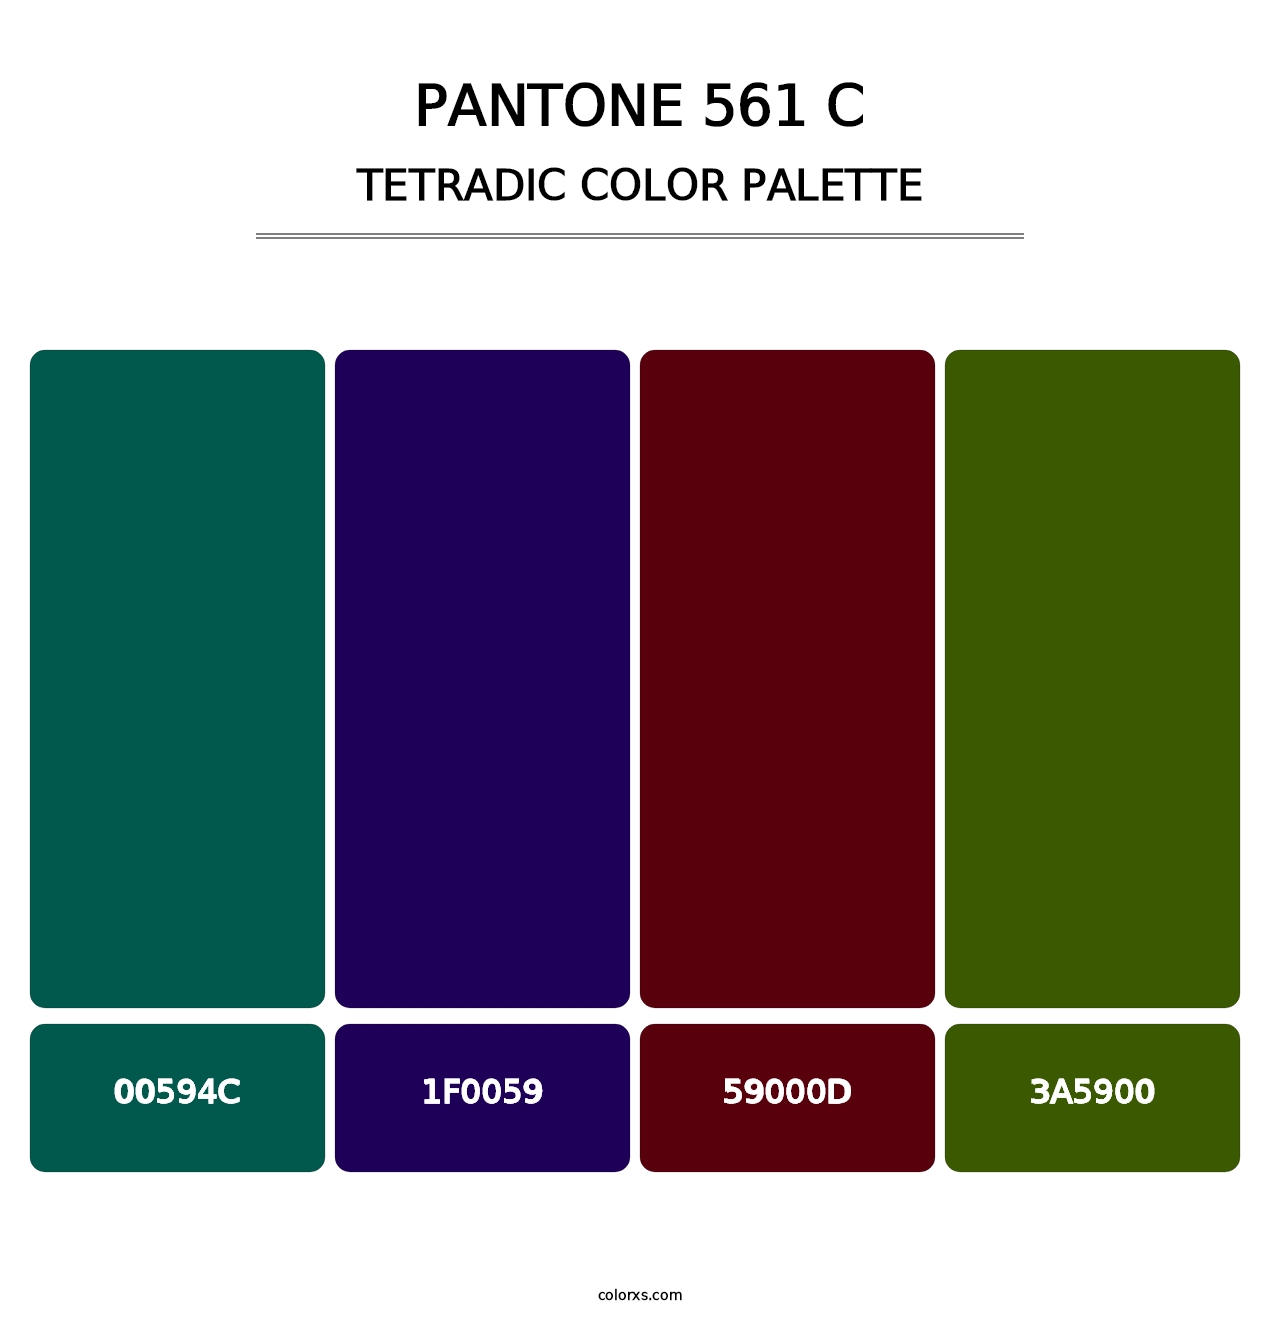 PANTONE 561 C - Tetradic Color Palette